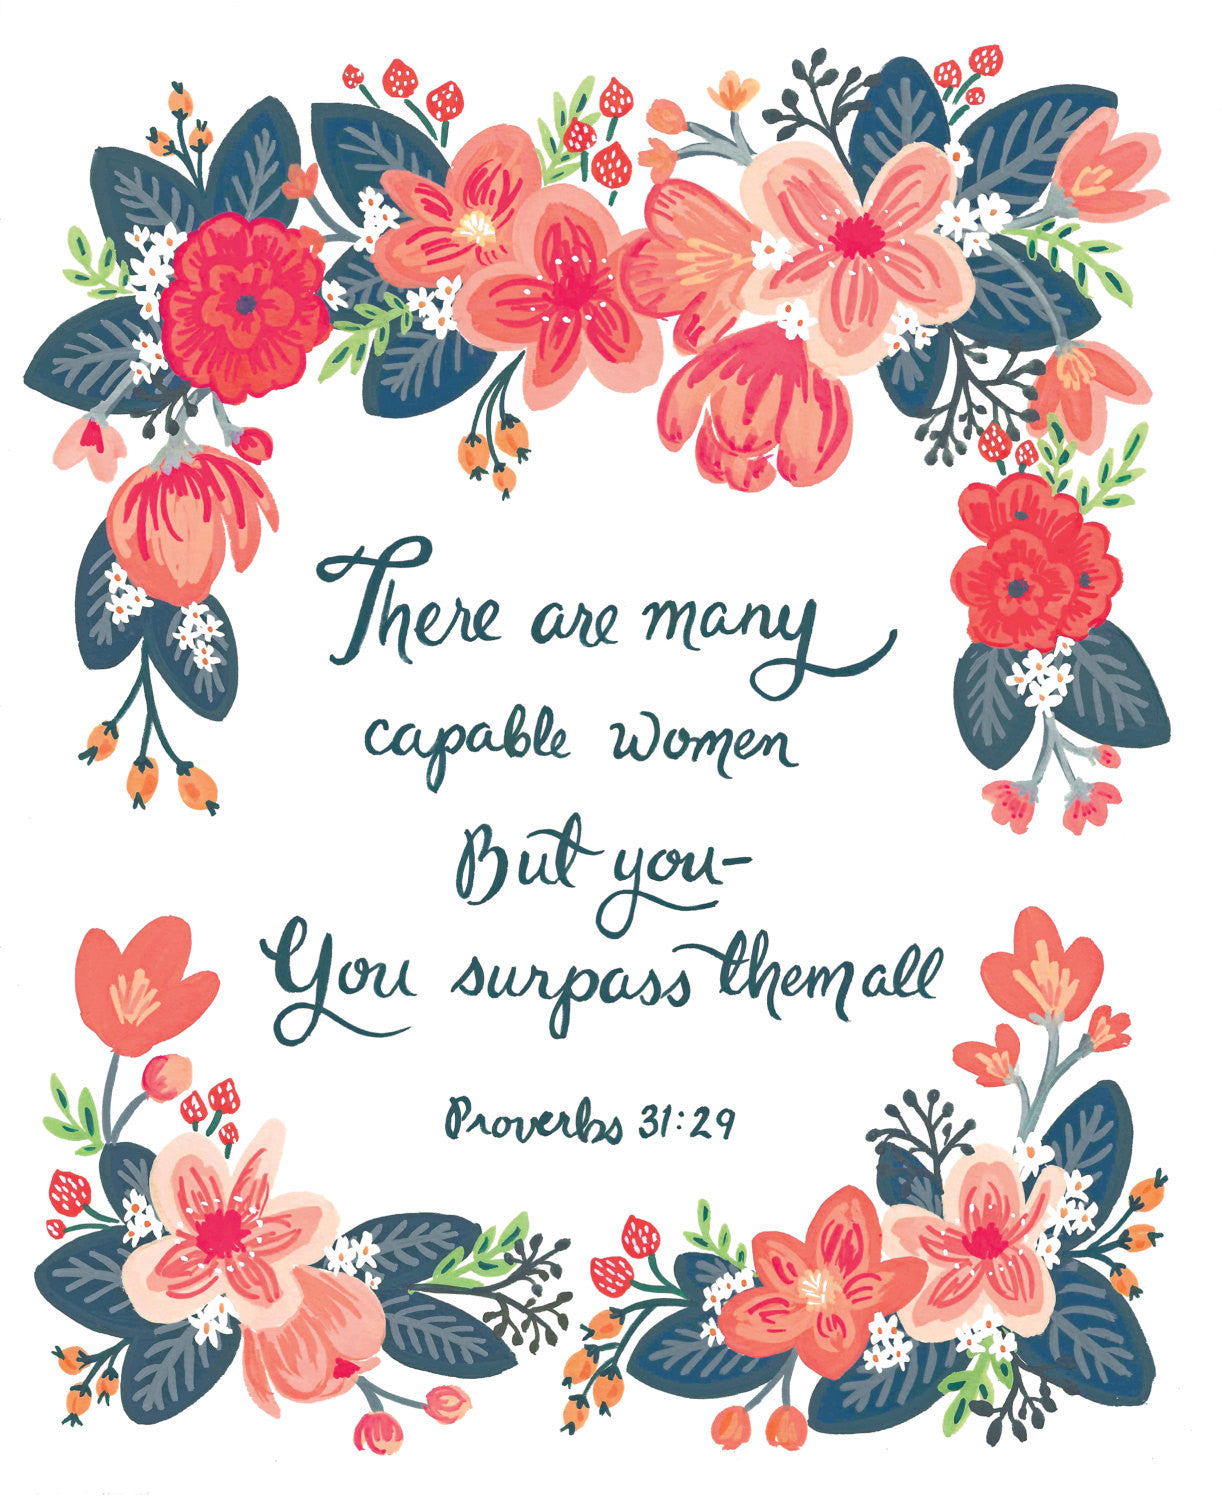 Capable Woman - Proverbs 31:29 8x10 Scriptural Wall Art Print